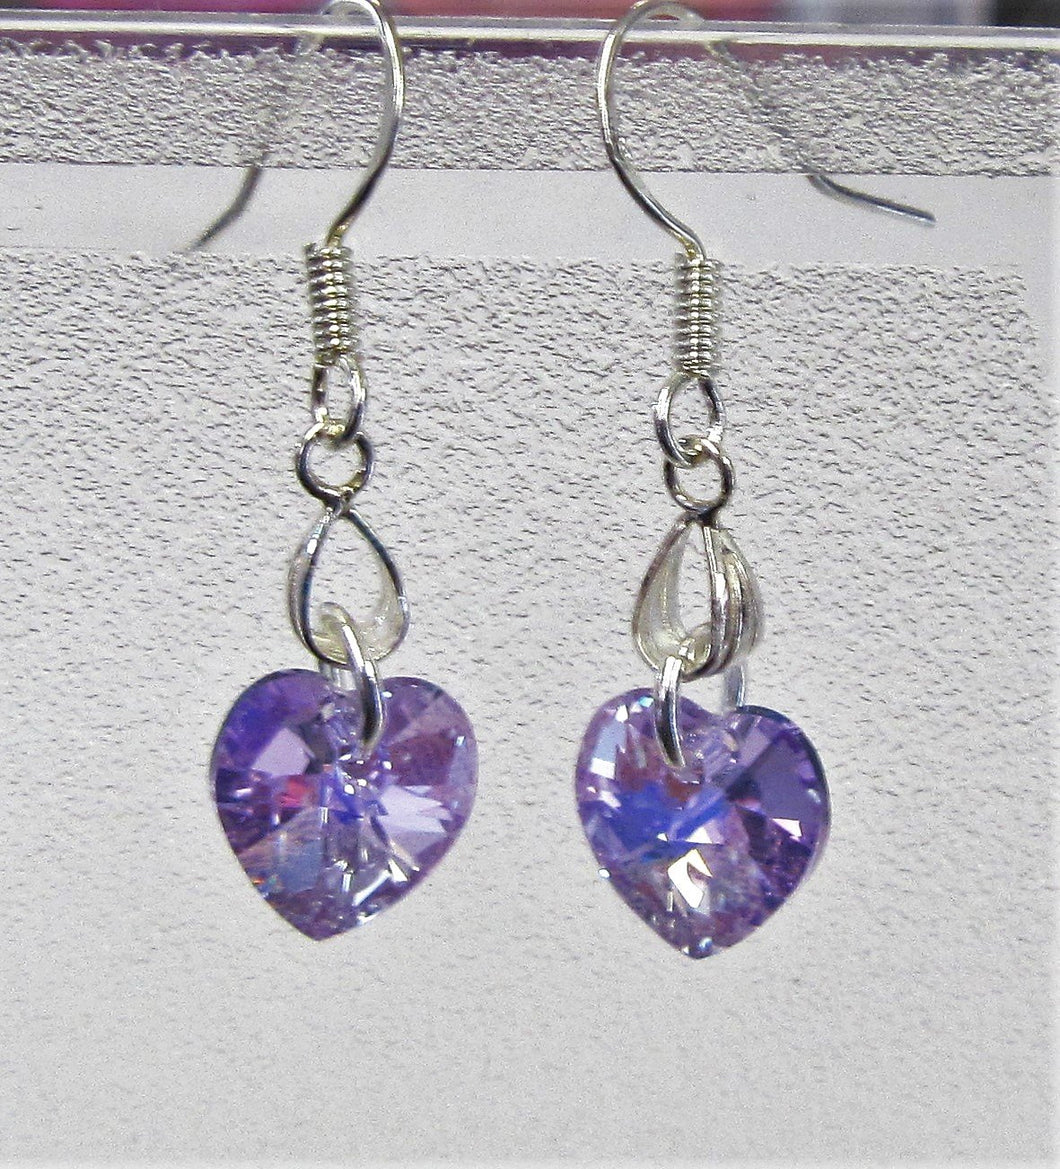 Handcrafted swarovski Crystal purple hearts on sterling silver earring hooks